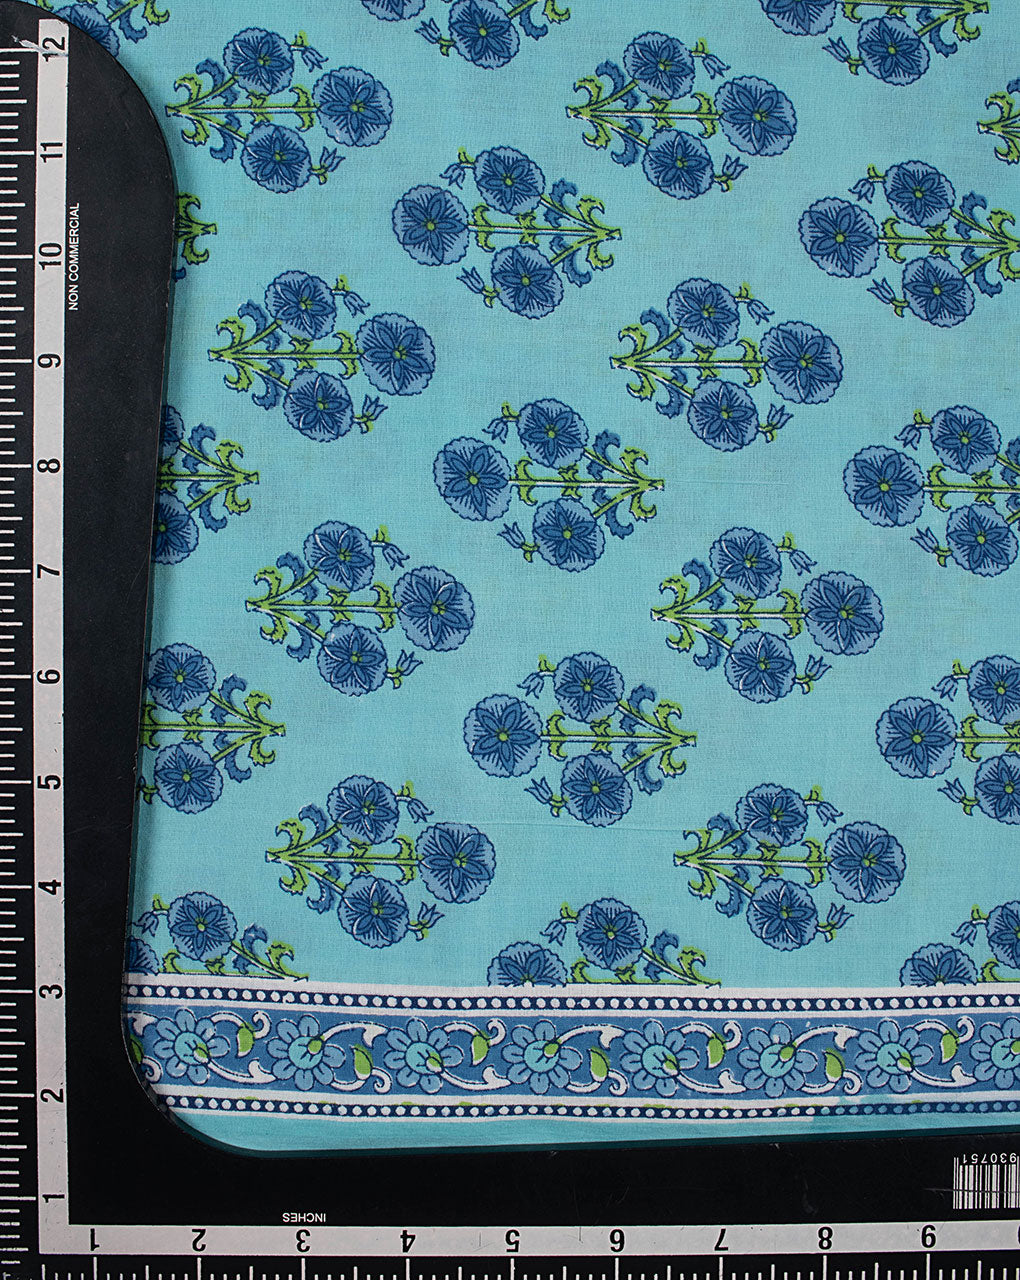 Floral Screen Print Cotton Fabric - Fabriclore.com